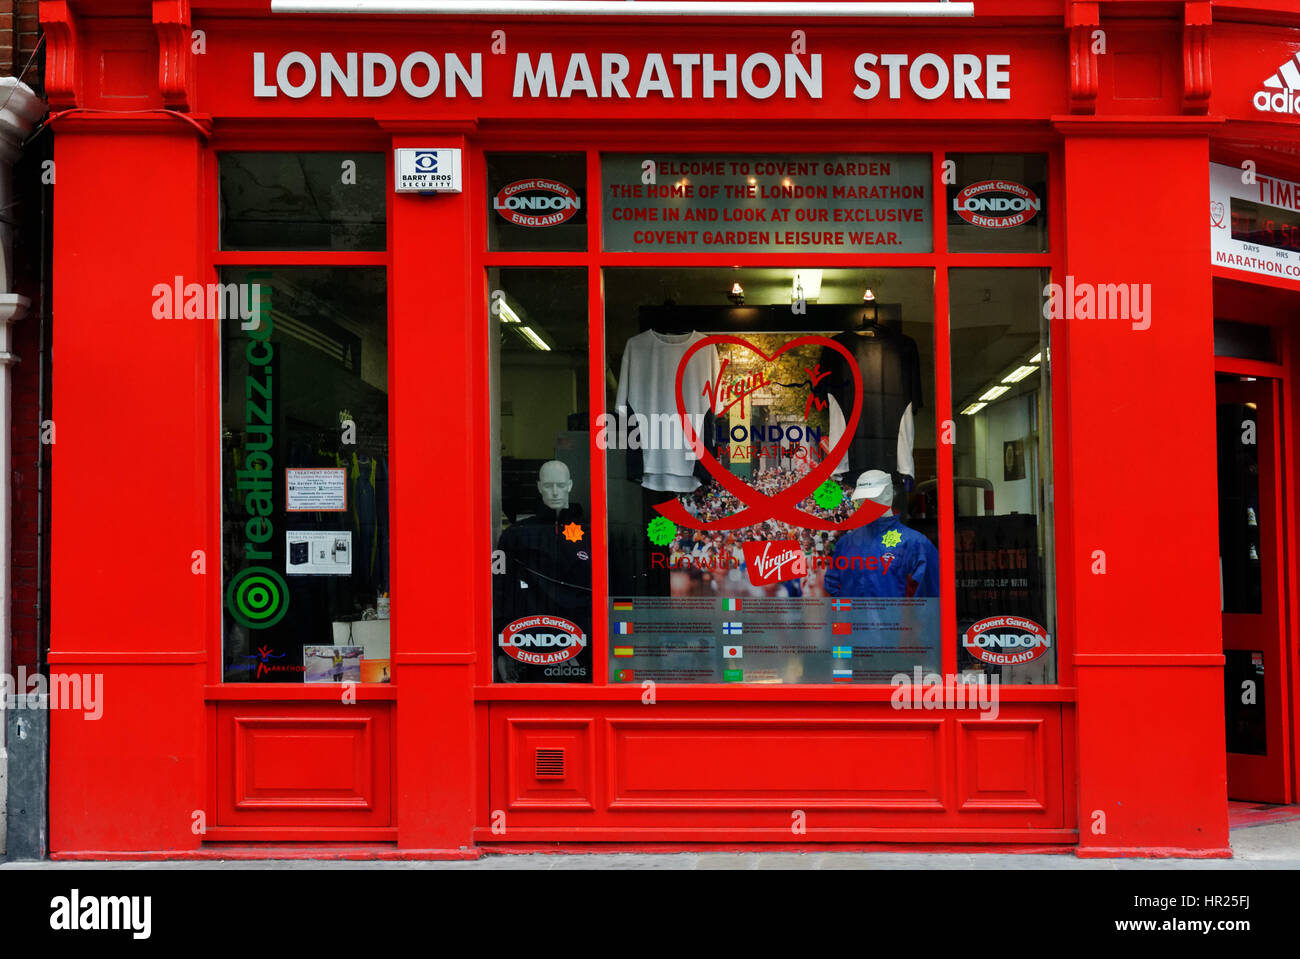 London Store in London Stock Photo - Alamy